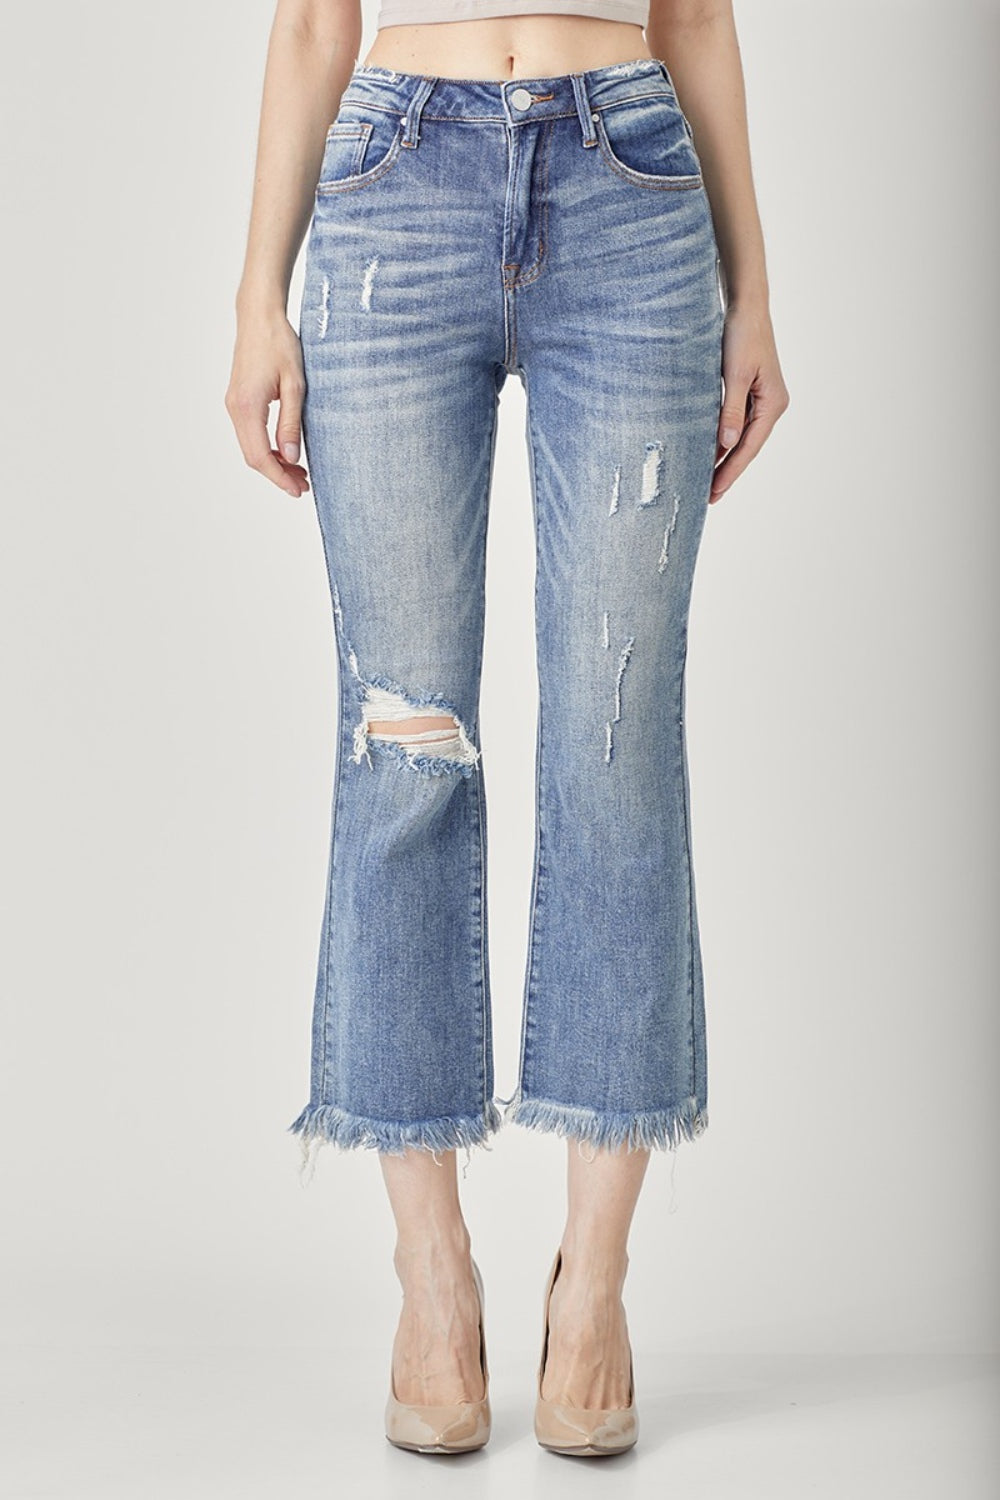 RISEN - Cropped Flare Jeans - Dark Wash - Inspired Eye Boutique